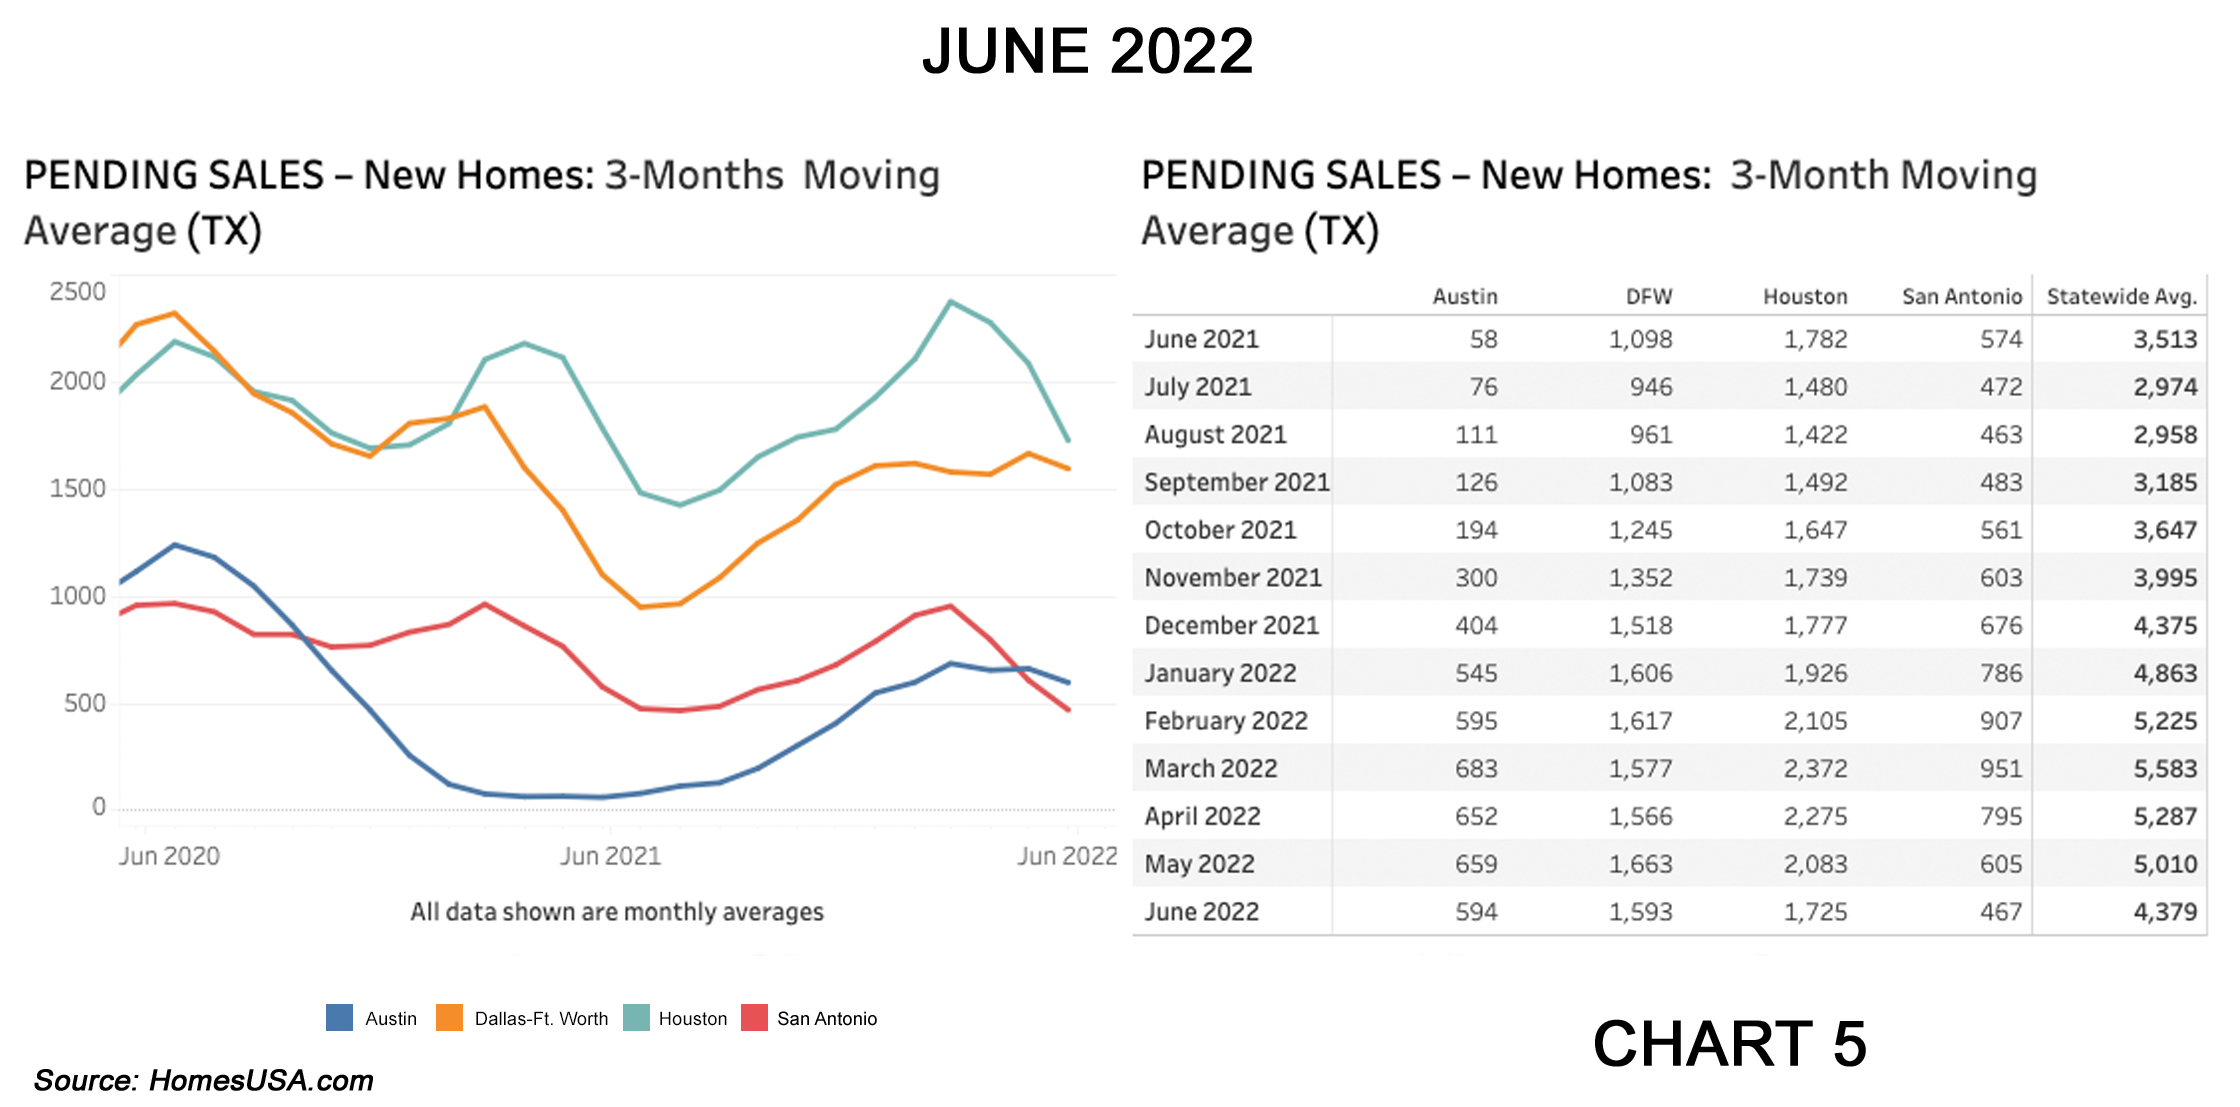 Chart 5: Texas Pending New Home Sales – June 2022